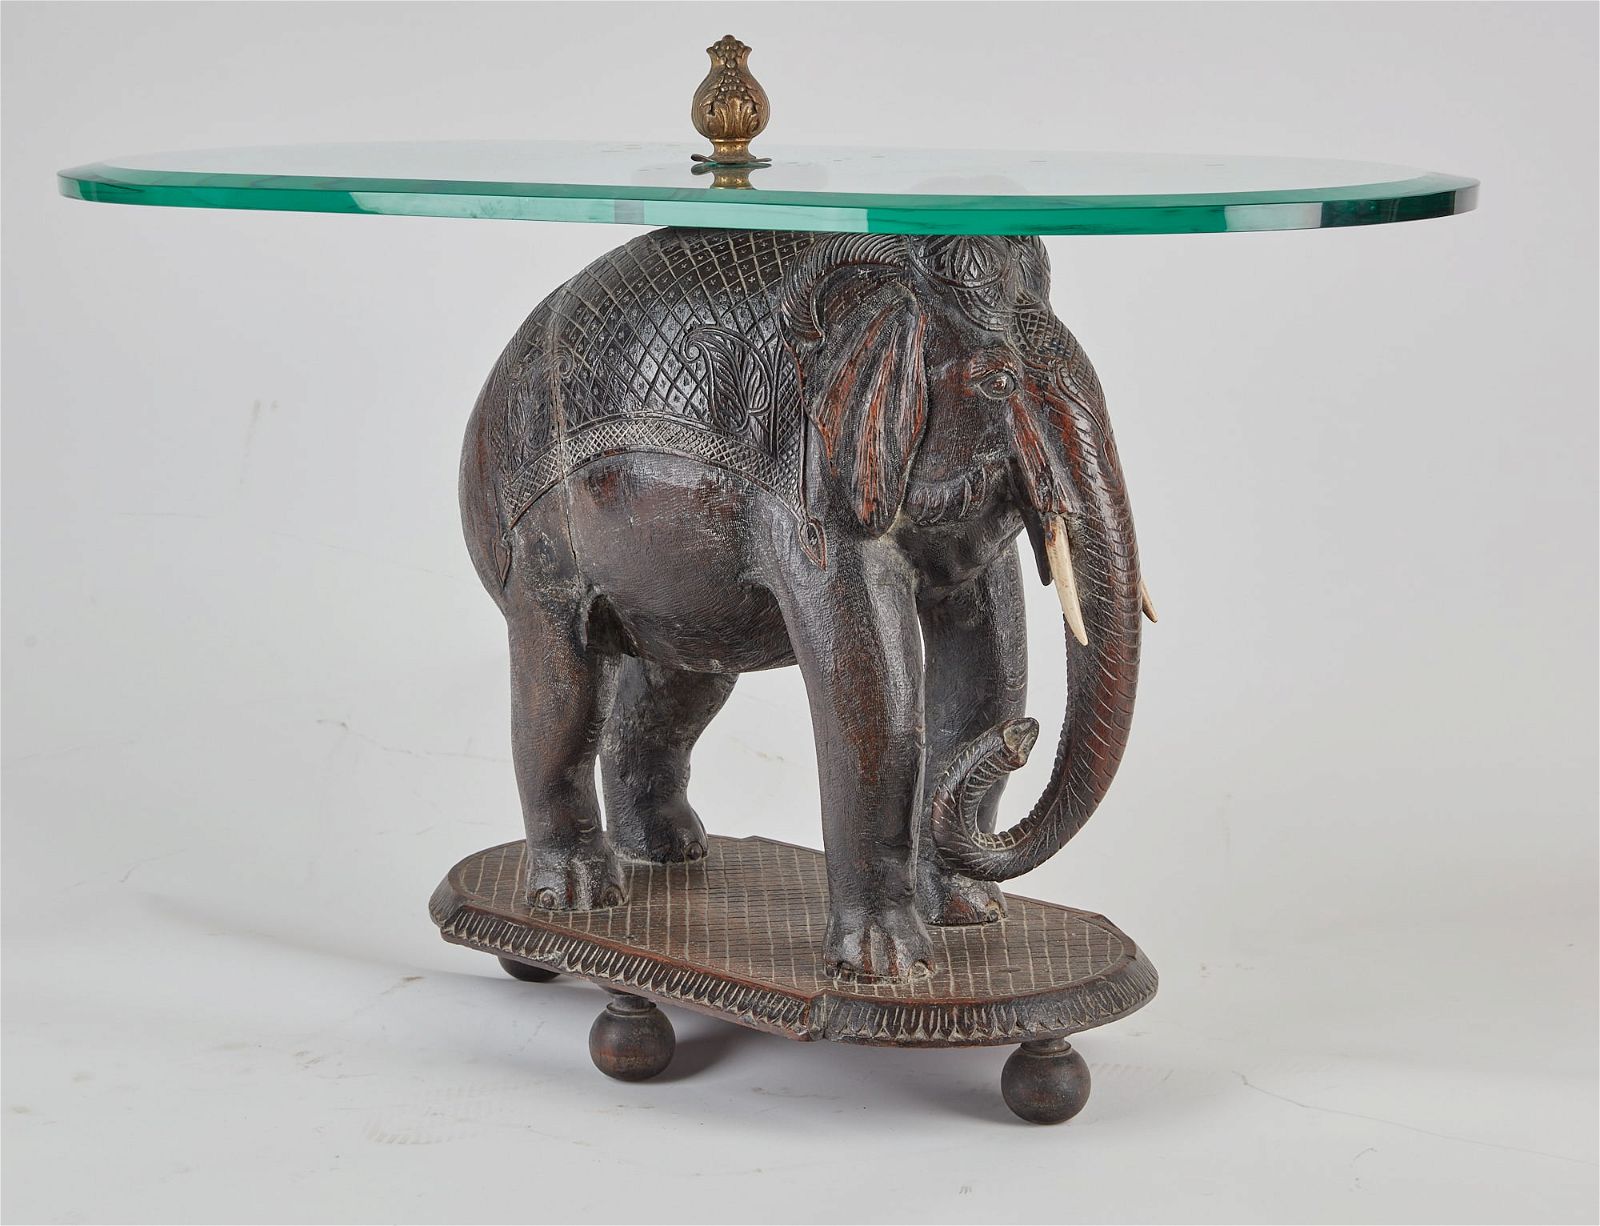 AN INDIAN HARDWOOD AND GLASS ELEPHANT